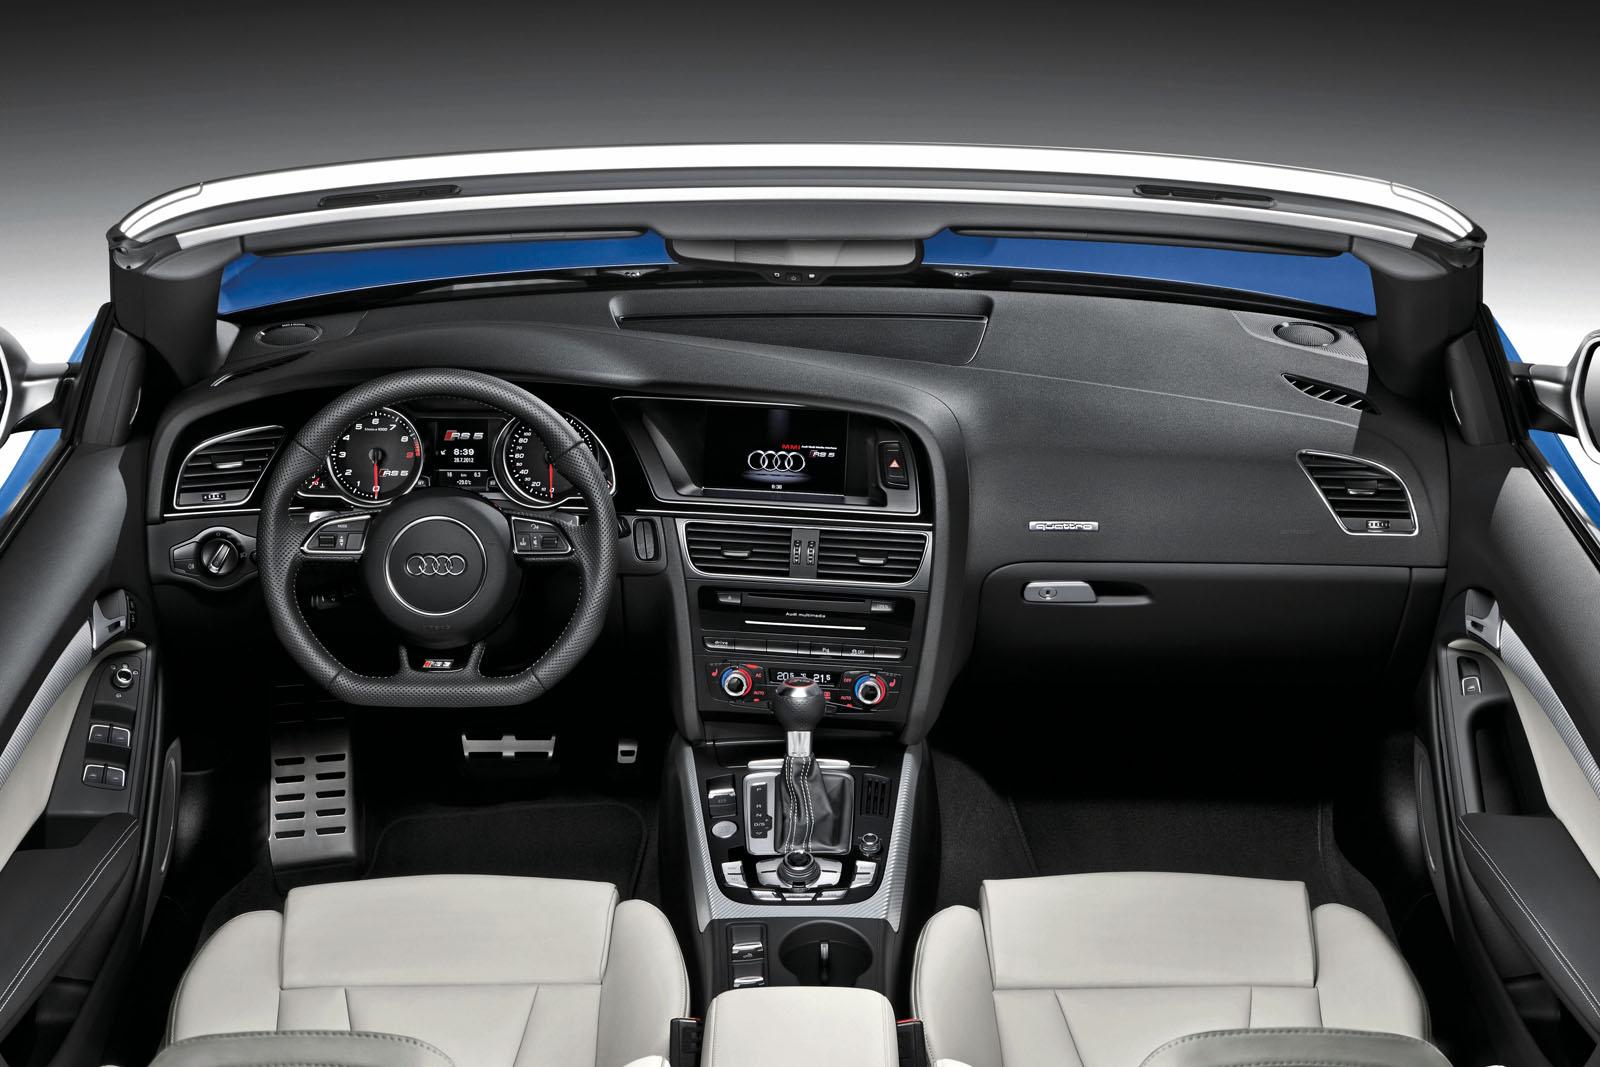 2013 Senner Tuning Audi S5 Convertible Interior Dashboard